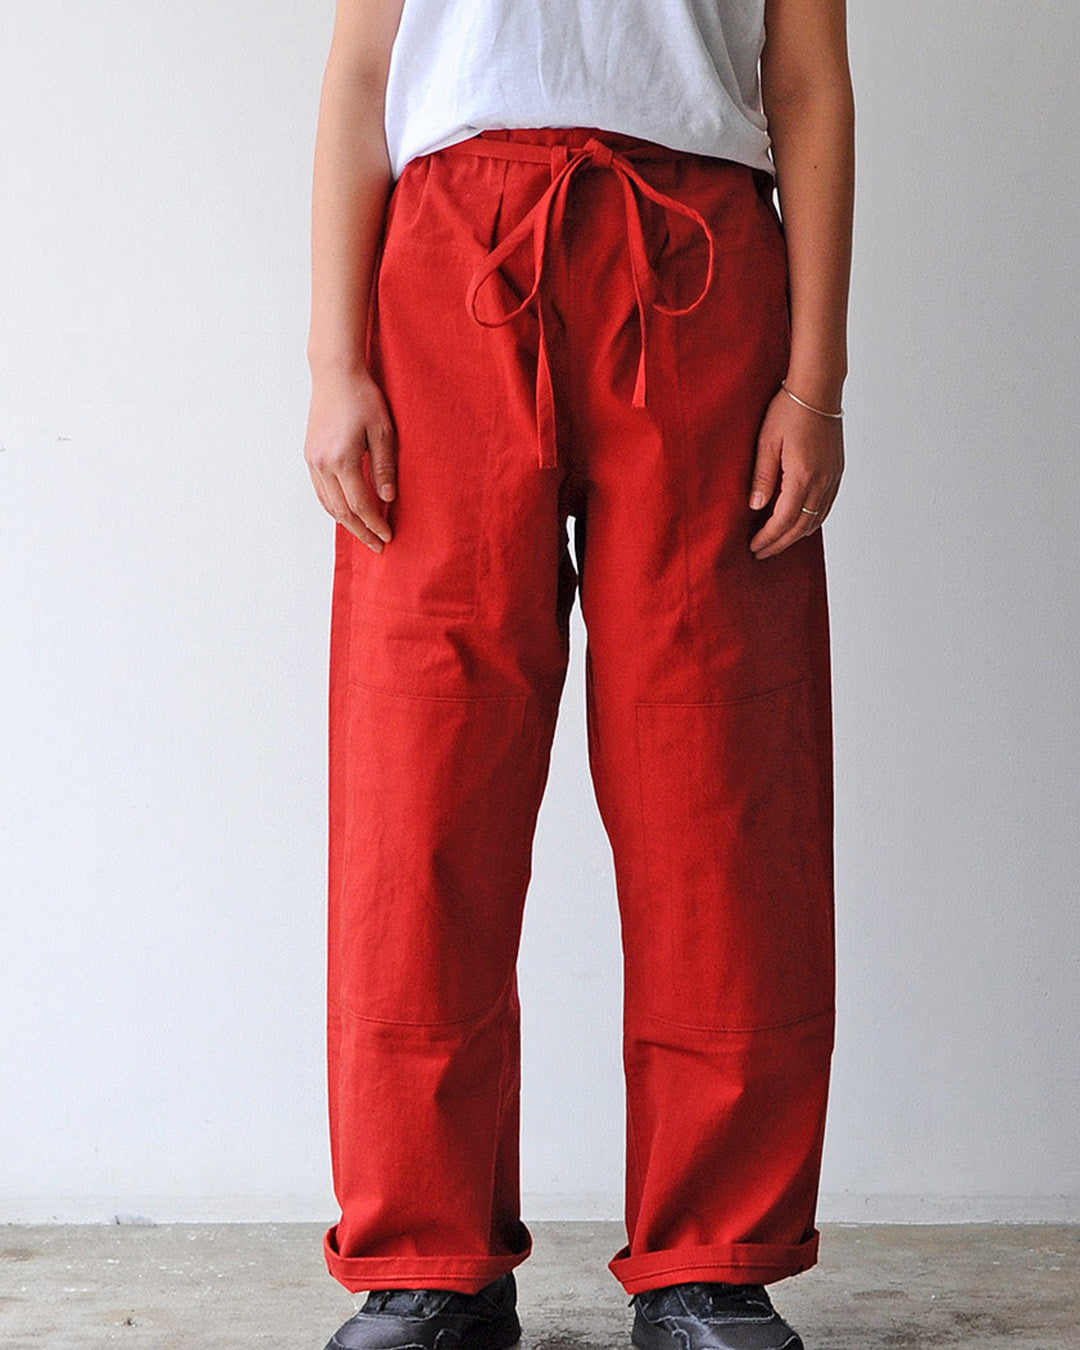 TUKI karate pants / red / solid twill【正規通販店】 カラテパンツ 